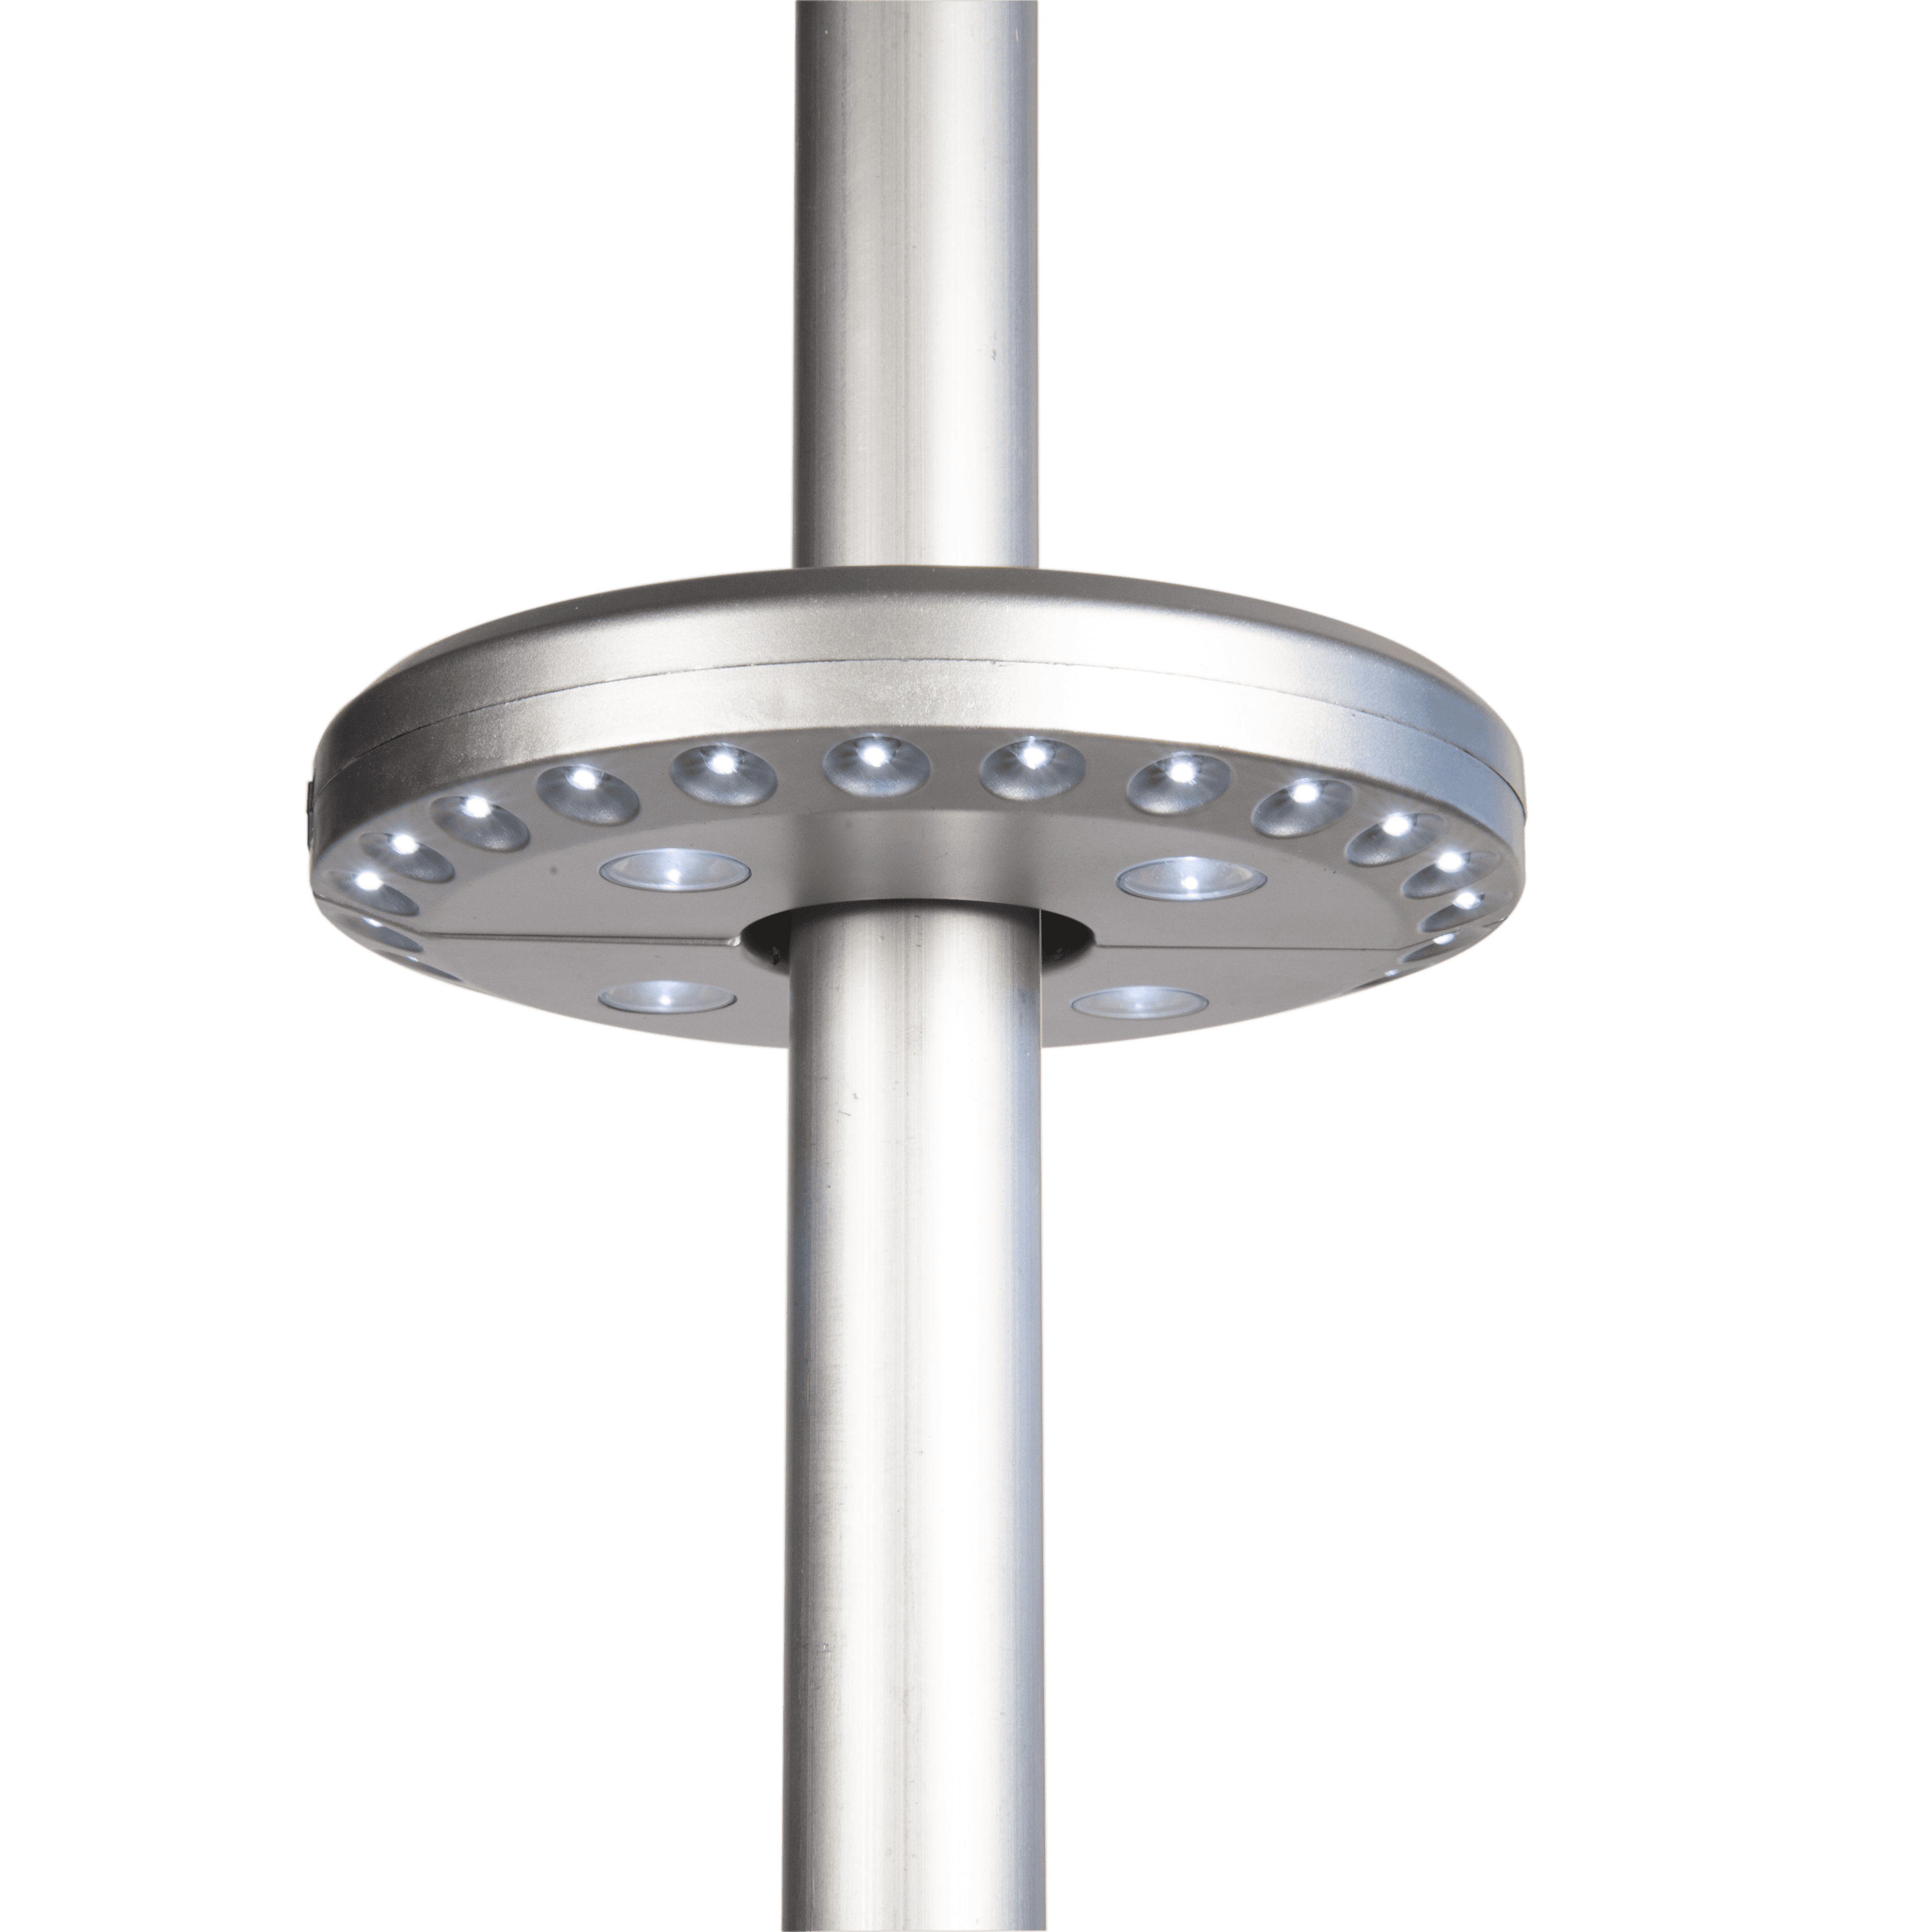 Central pole light disc prod